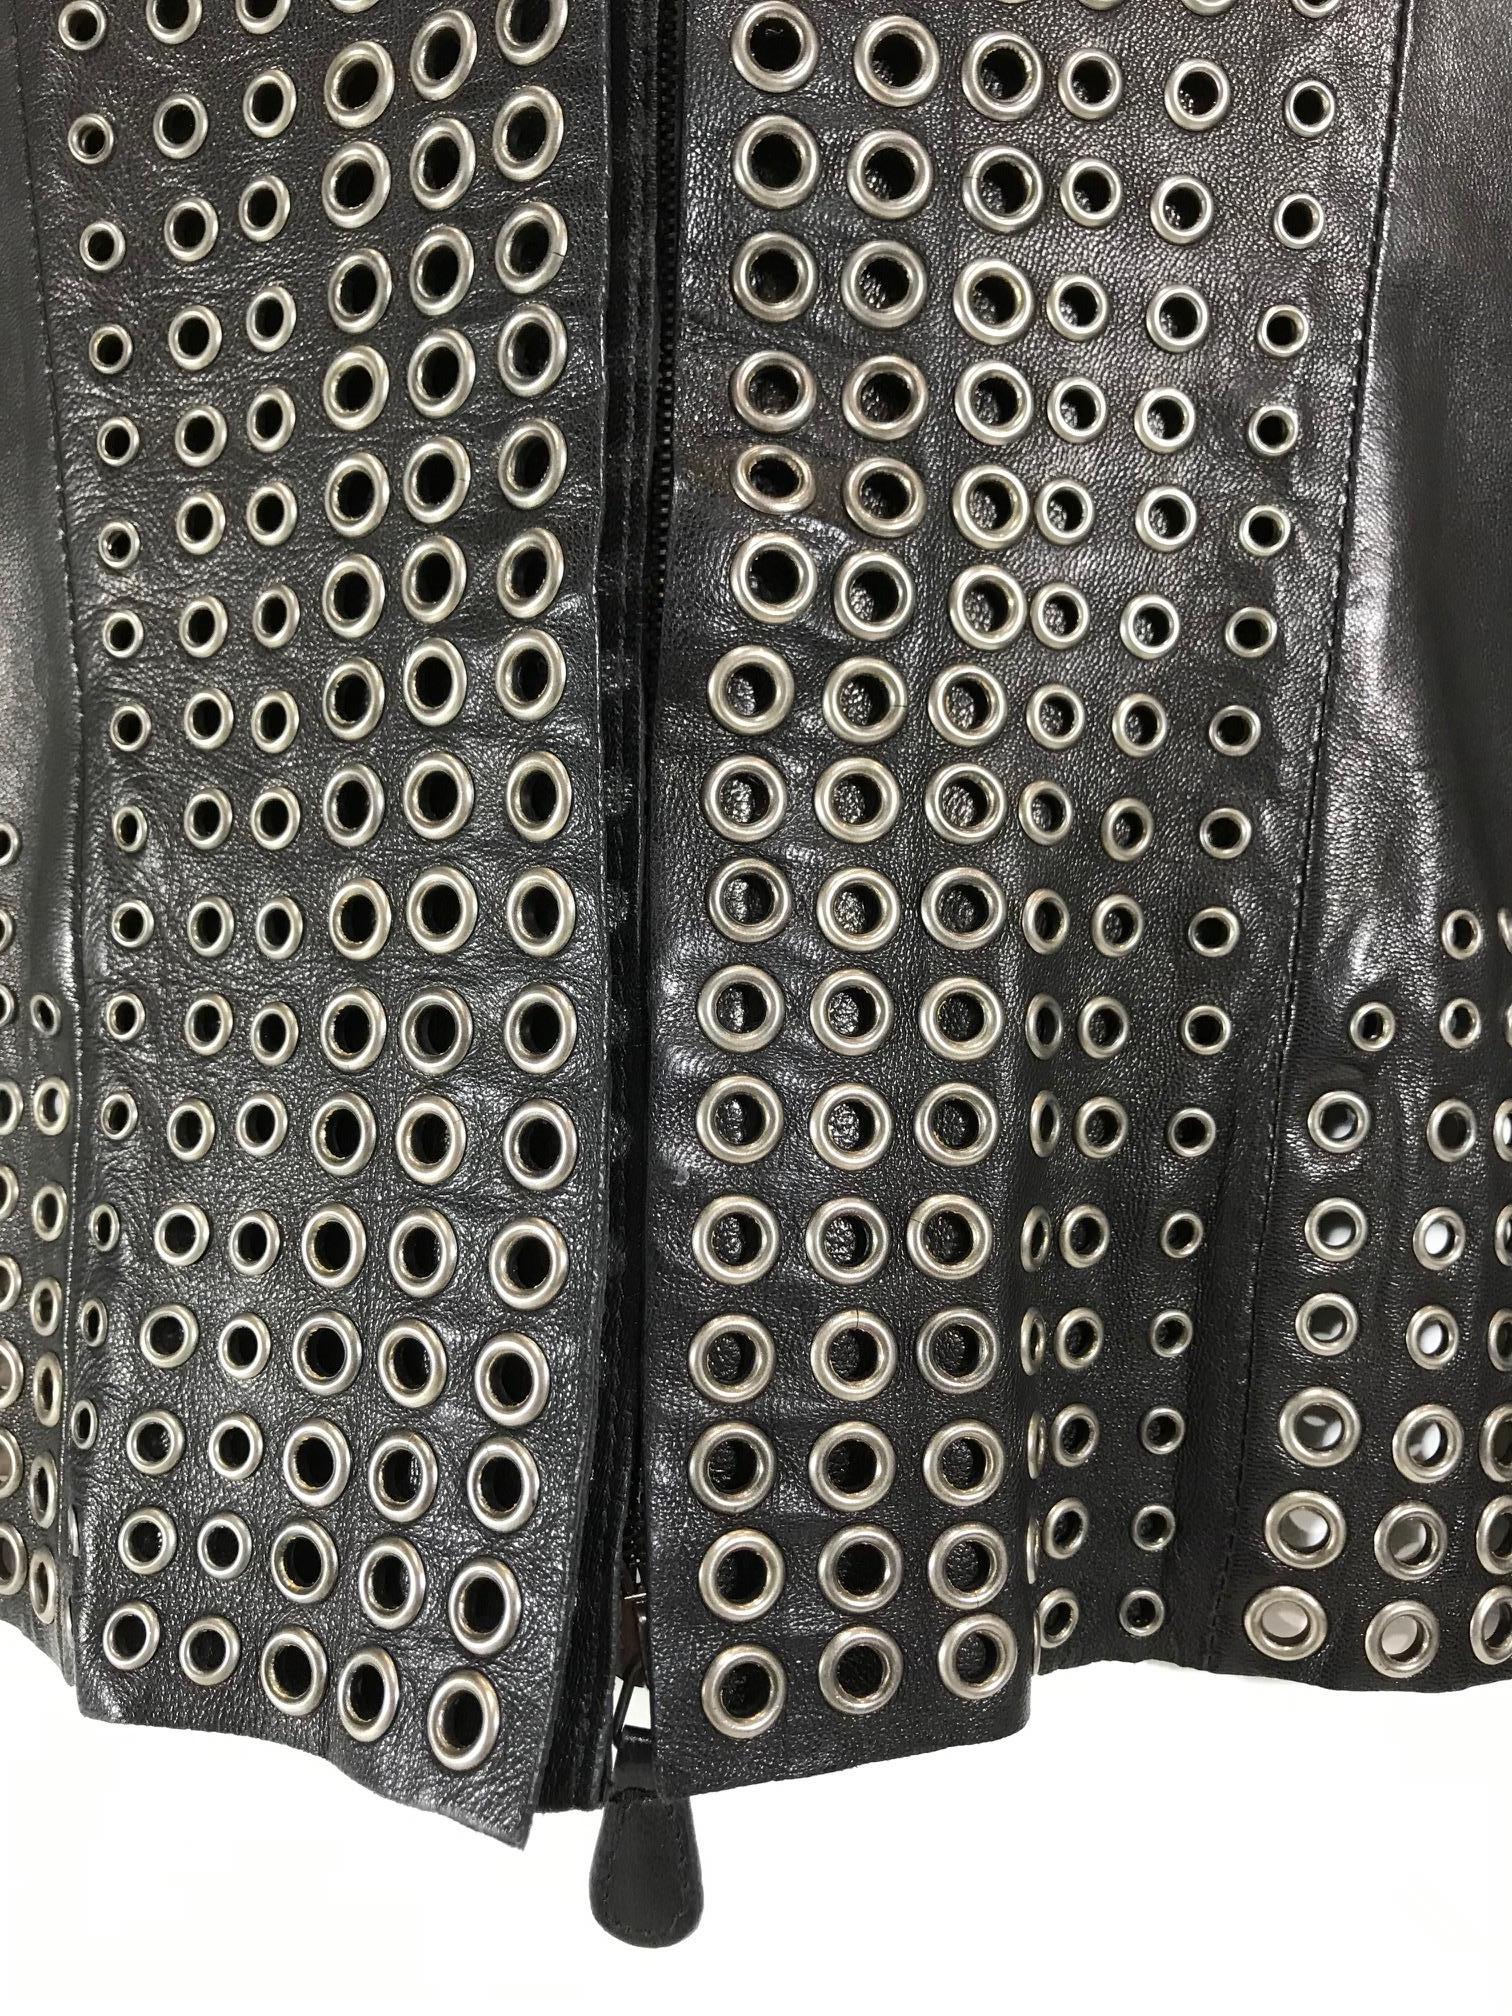 Alexander McQueen Grommets Leather Jacket For Sale 1